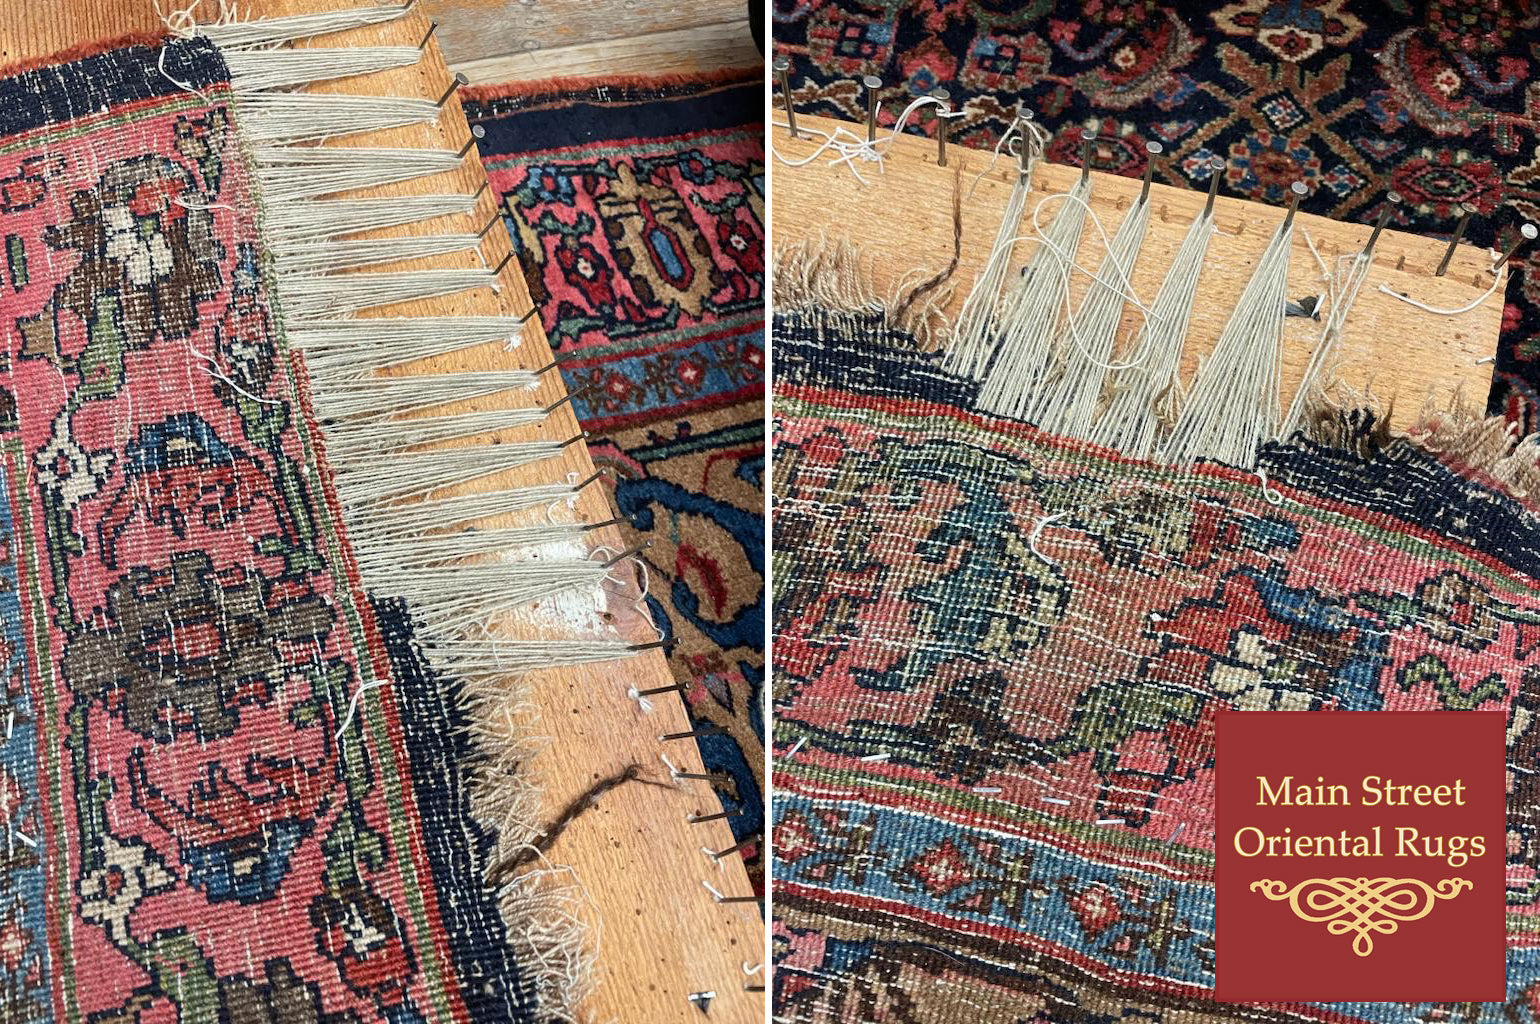 Full rug restoration for antique Persian Bidjar rug at Maryland State House